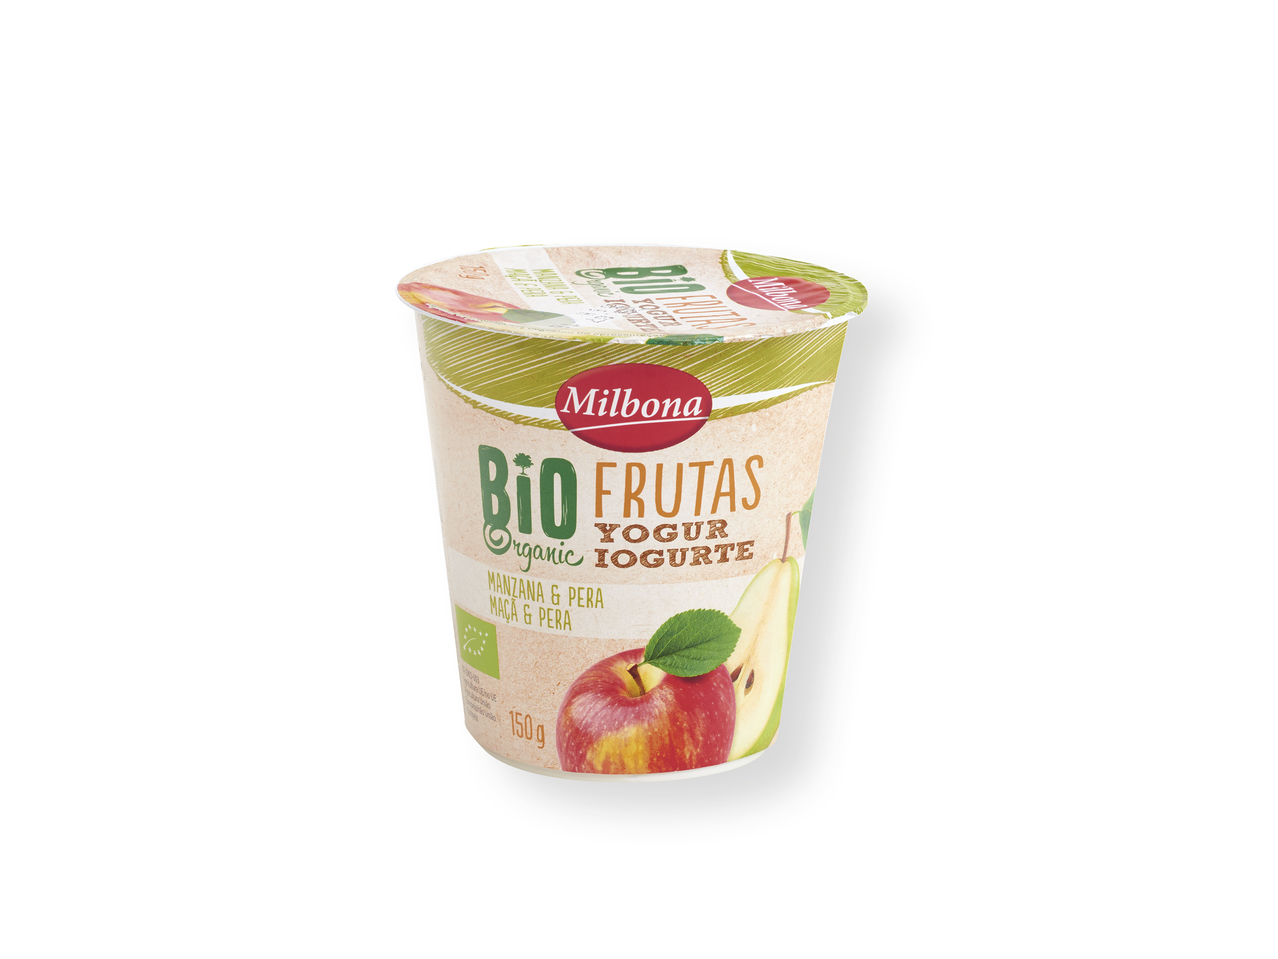 'Milbona(R)' Yogur de frutas ecológico